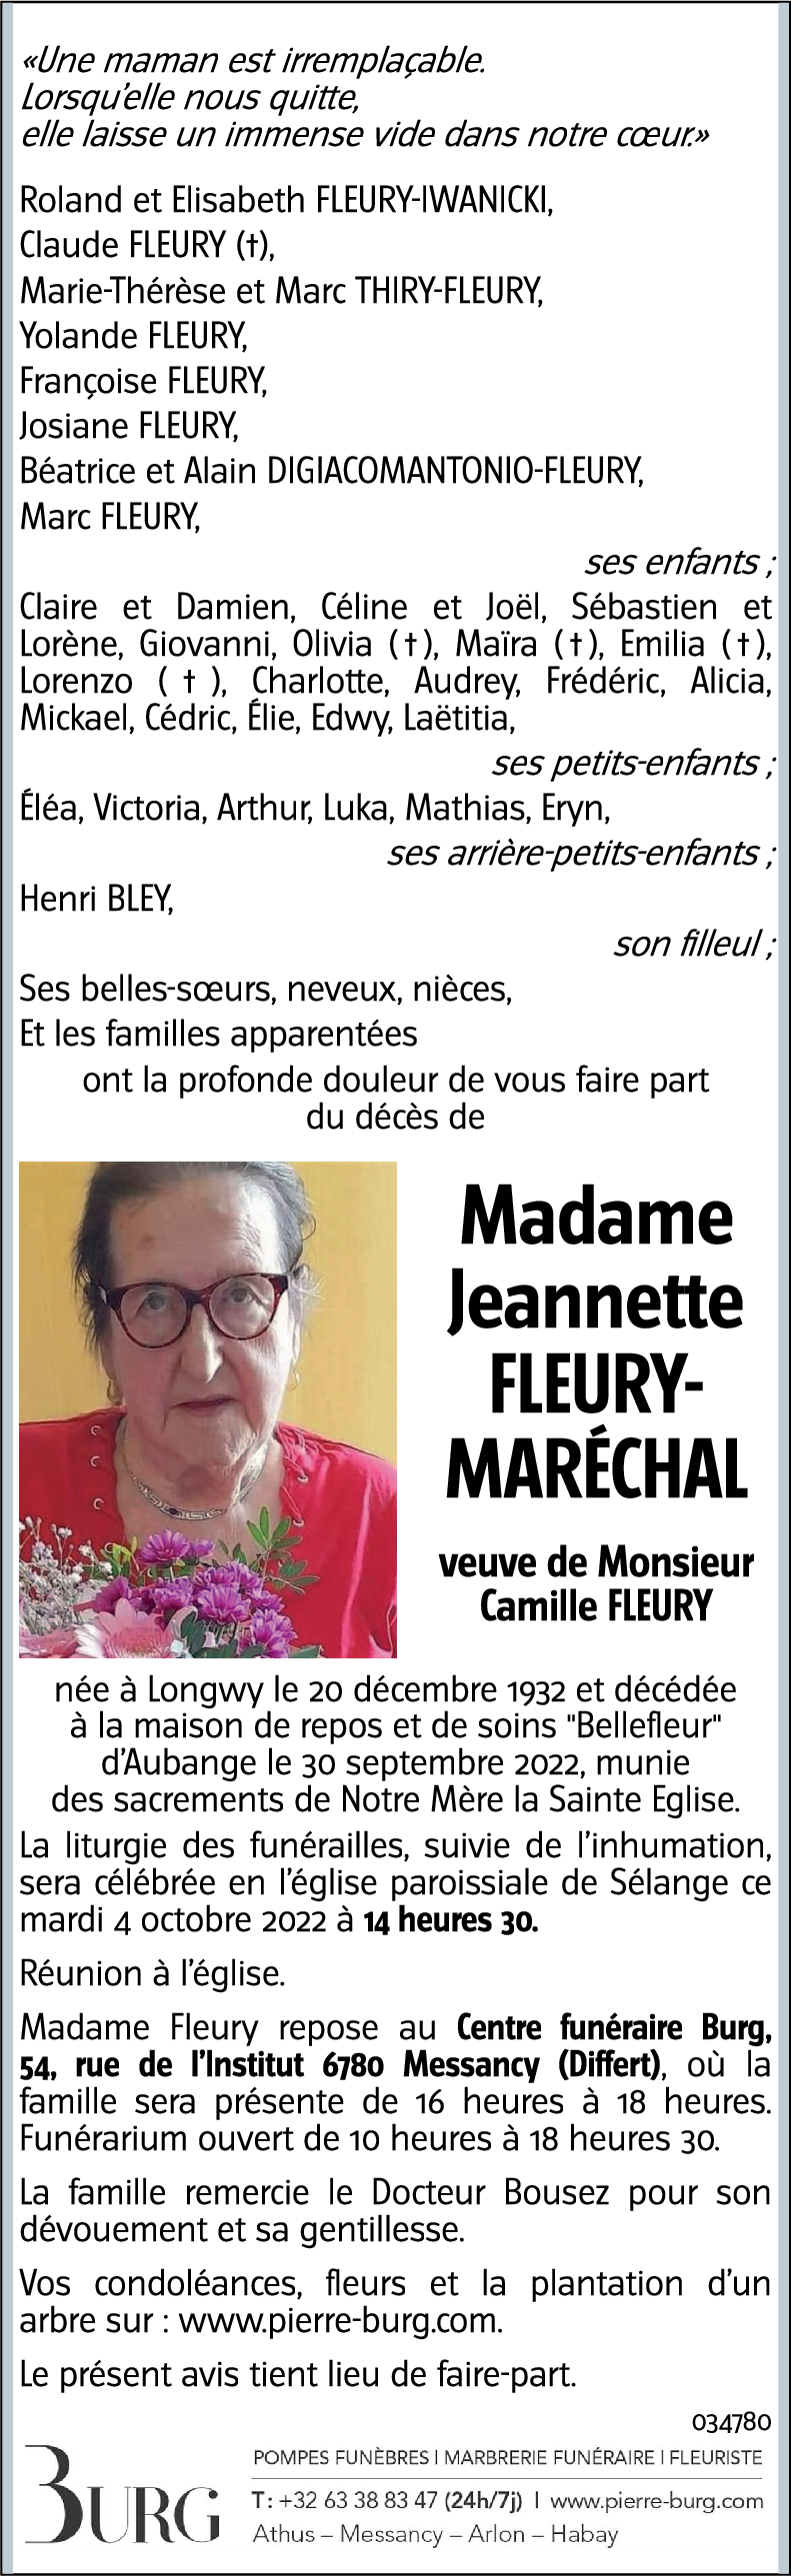 Jeannette FLEURY-MARECHAL